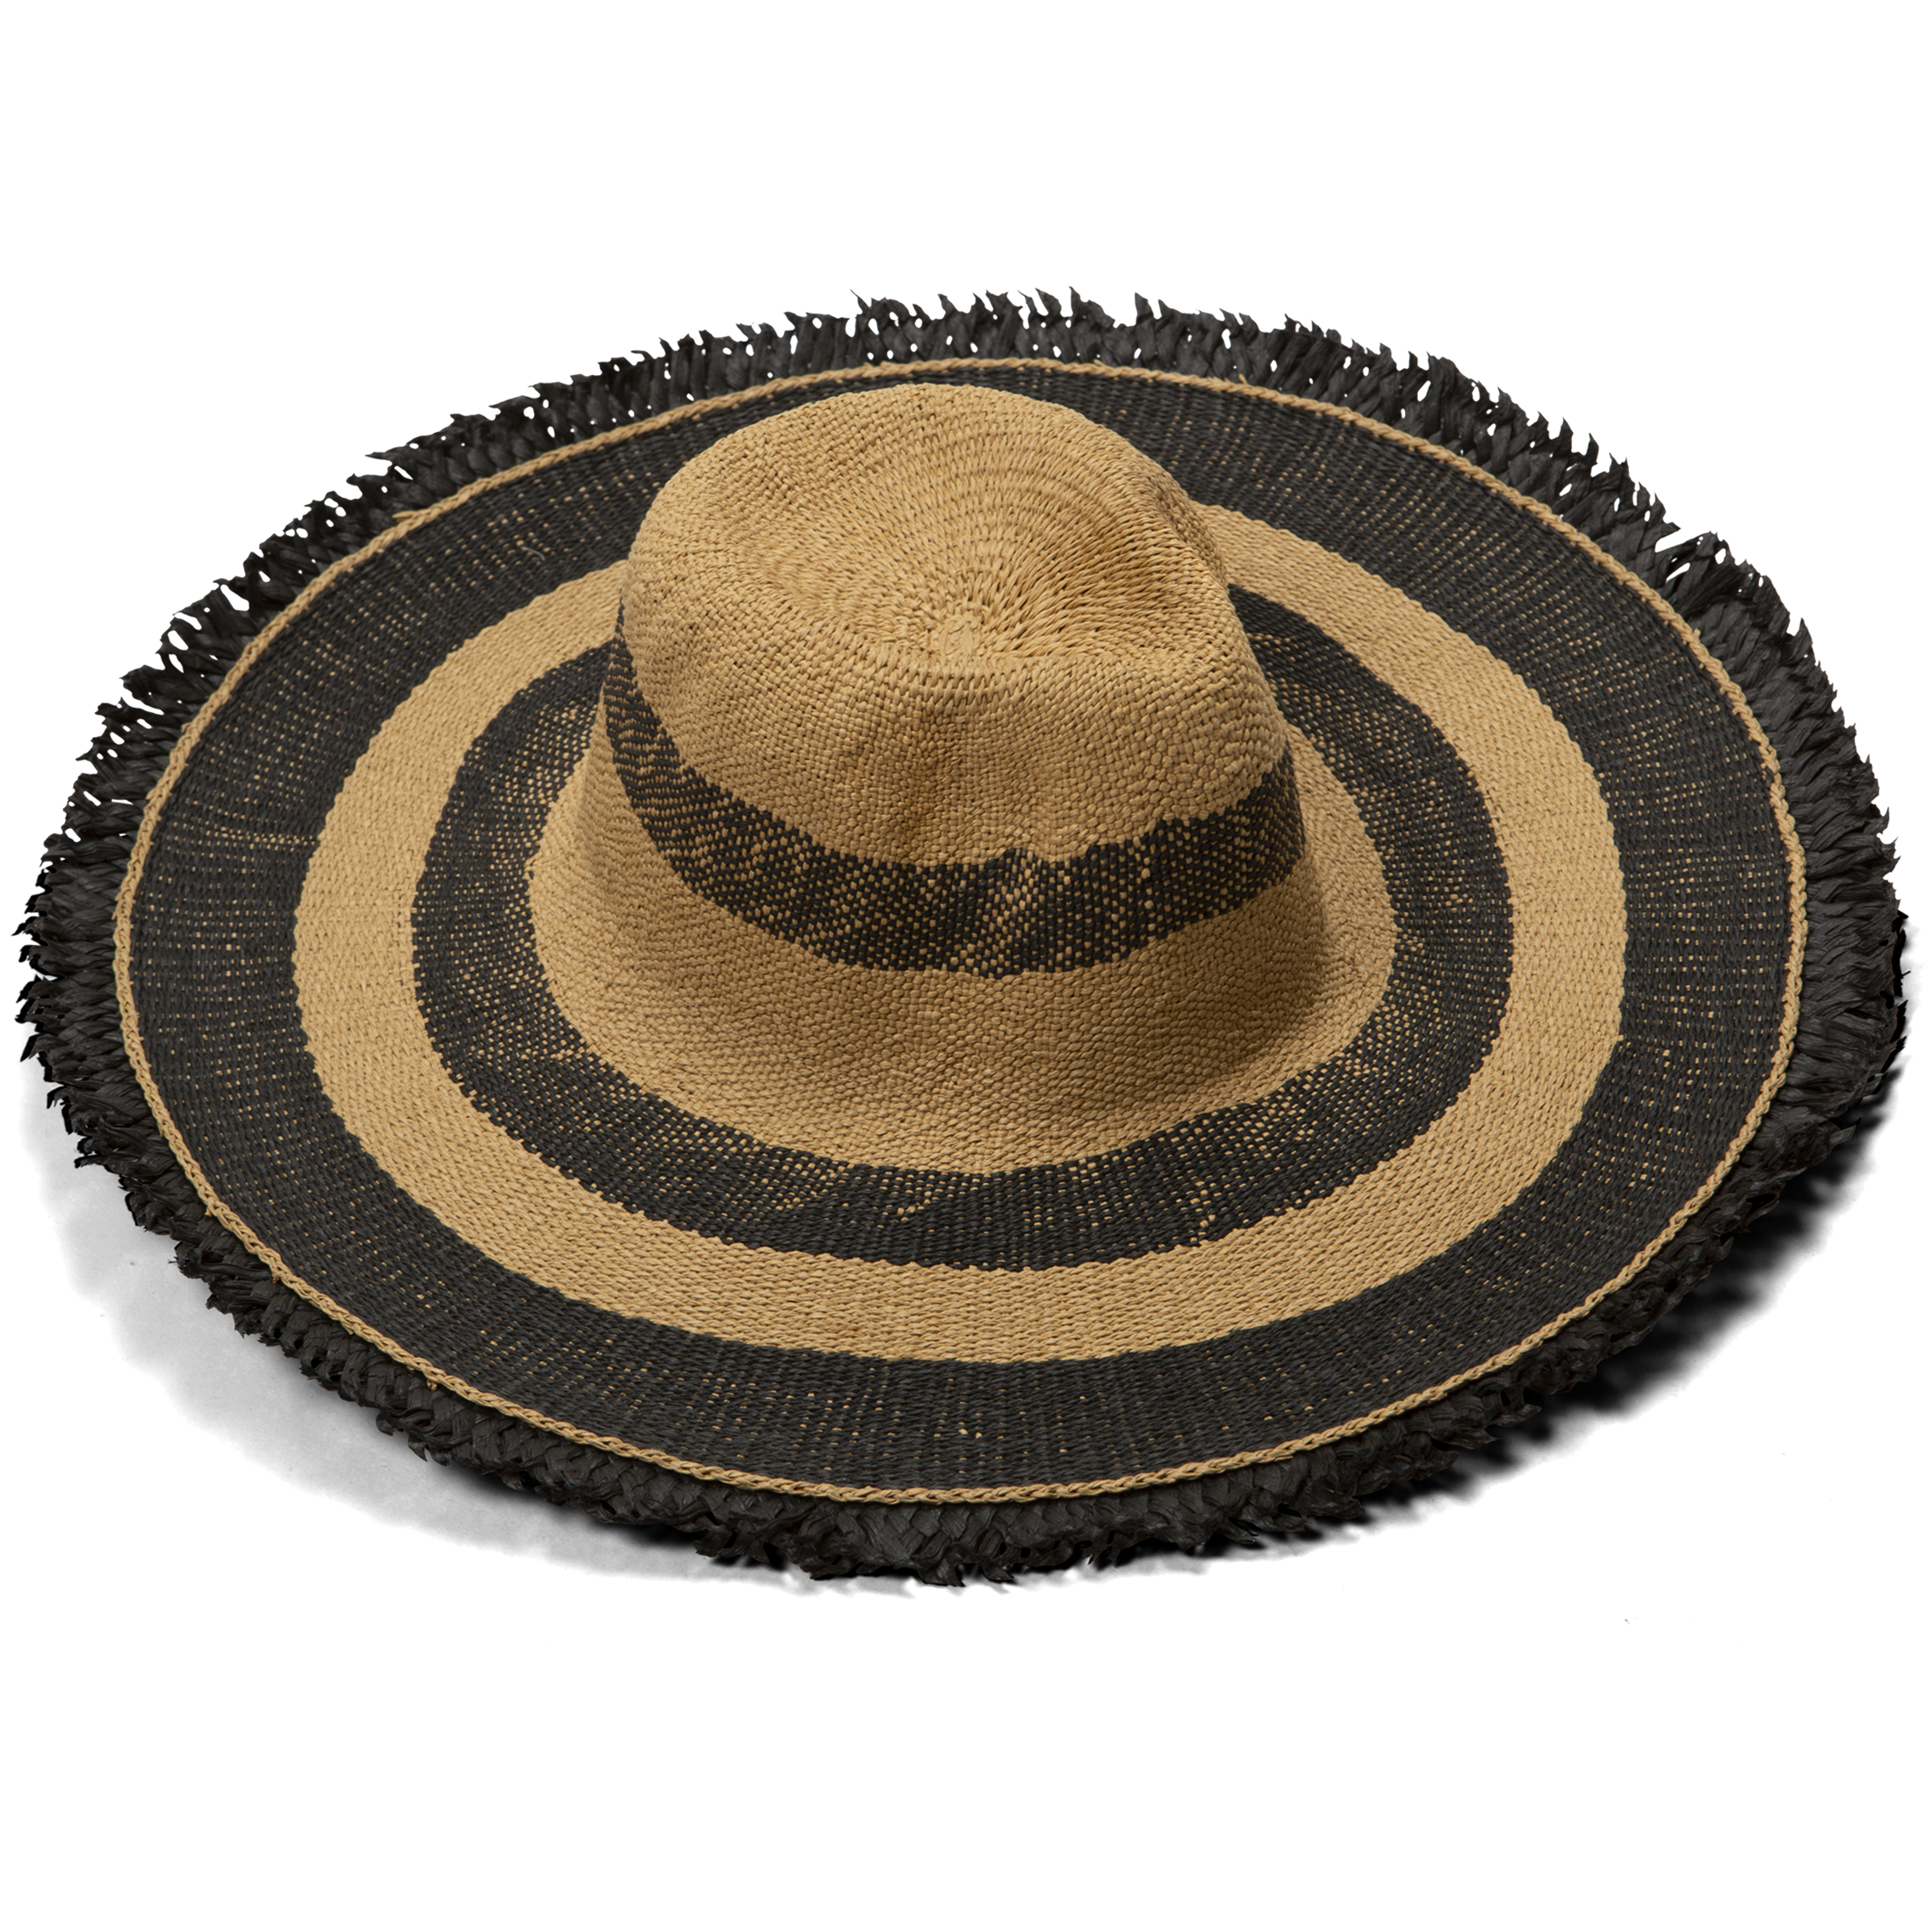 Kendra Straw Hat - Nature